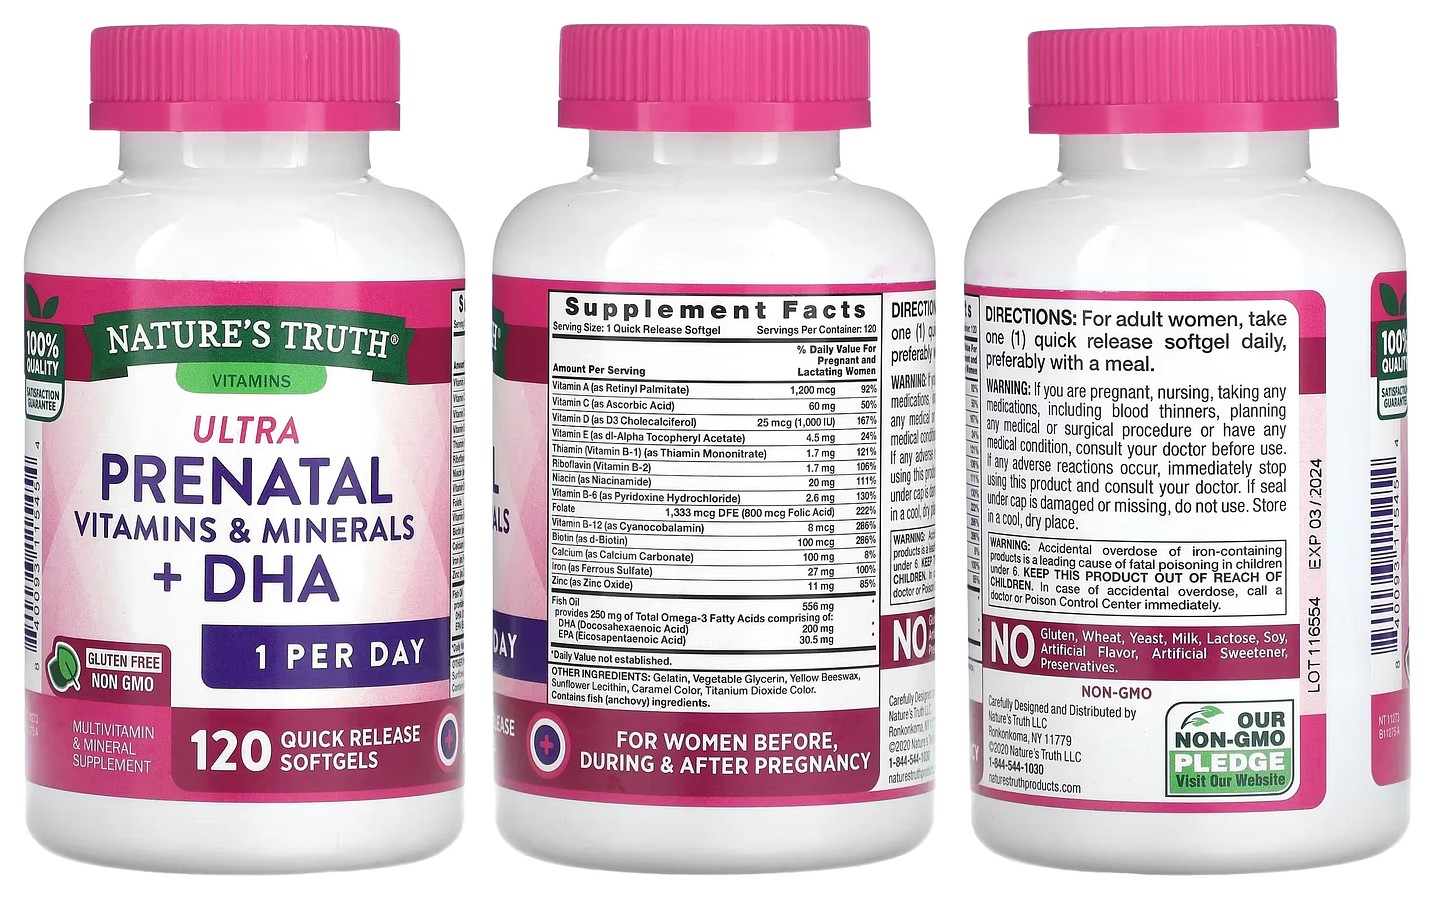 Nature's Truth, Ultra Prenatal Vitamins & Minerals + DHA packaging